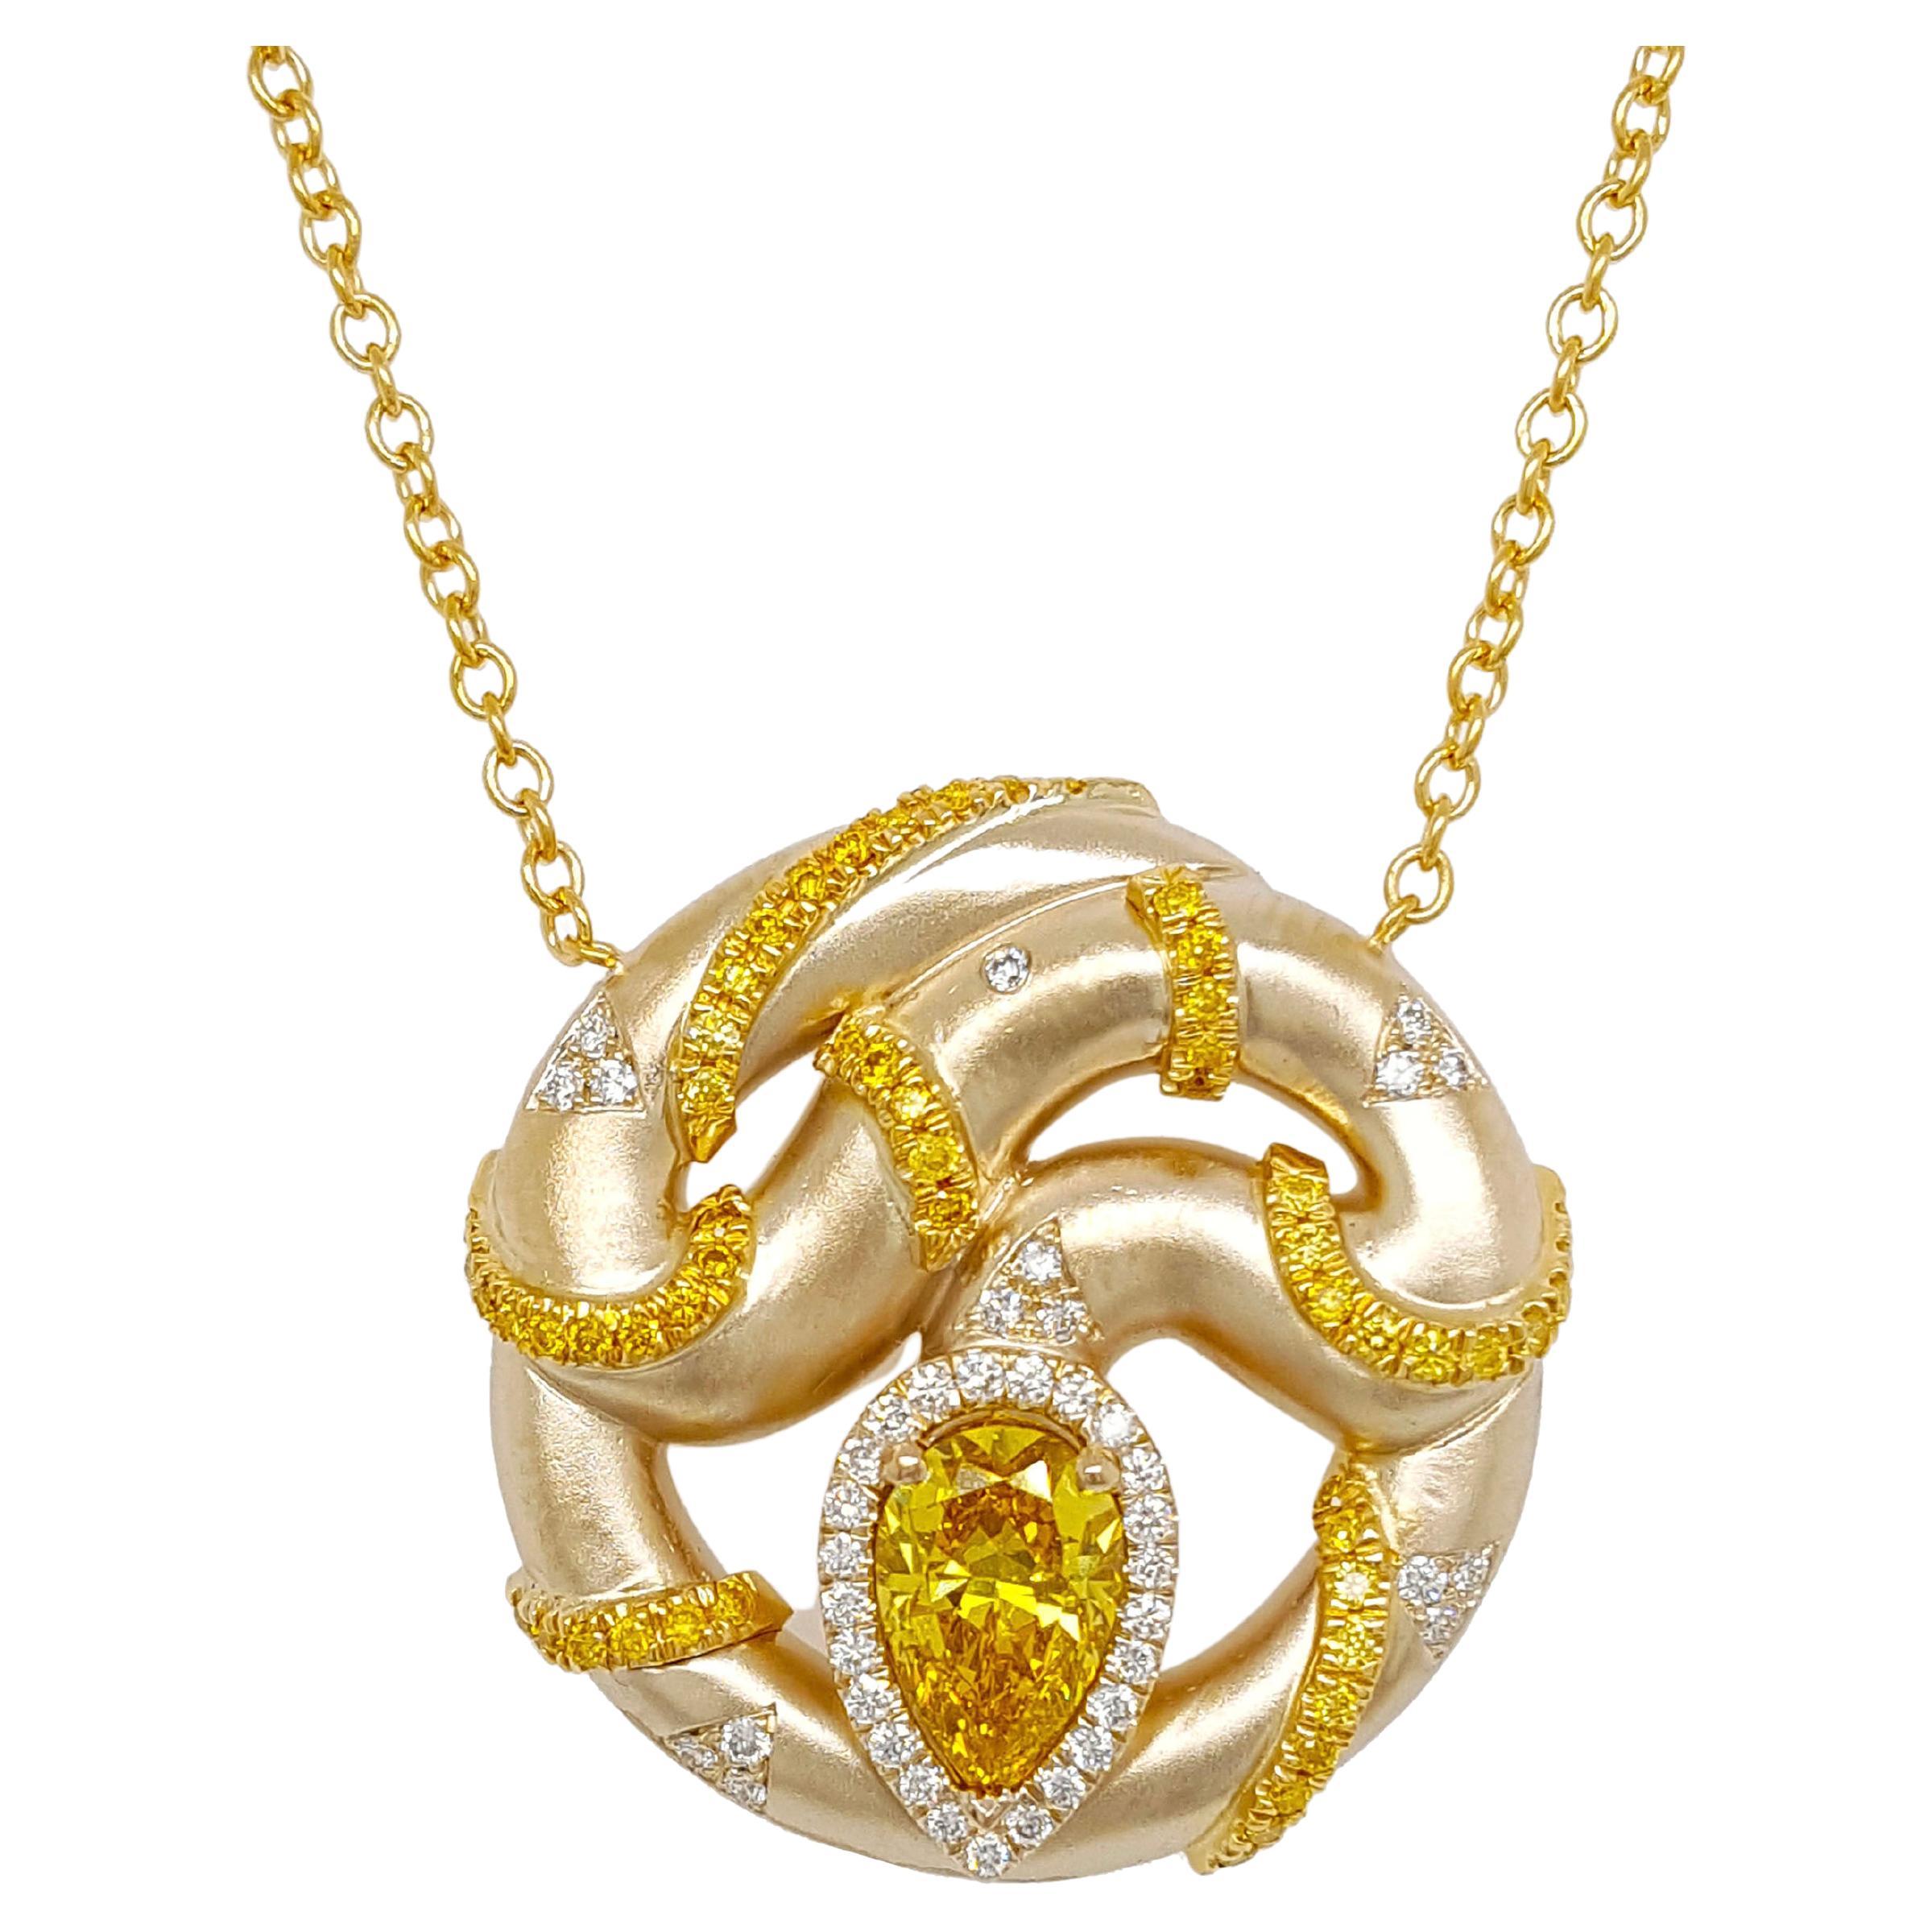 1 Carat Fancy Vivid Yellow Diamond Pendant Necklace 18K Gold GIA Certified For Sale